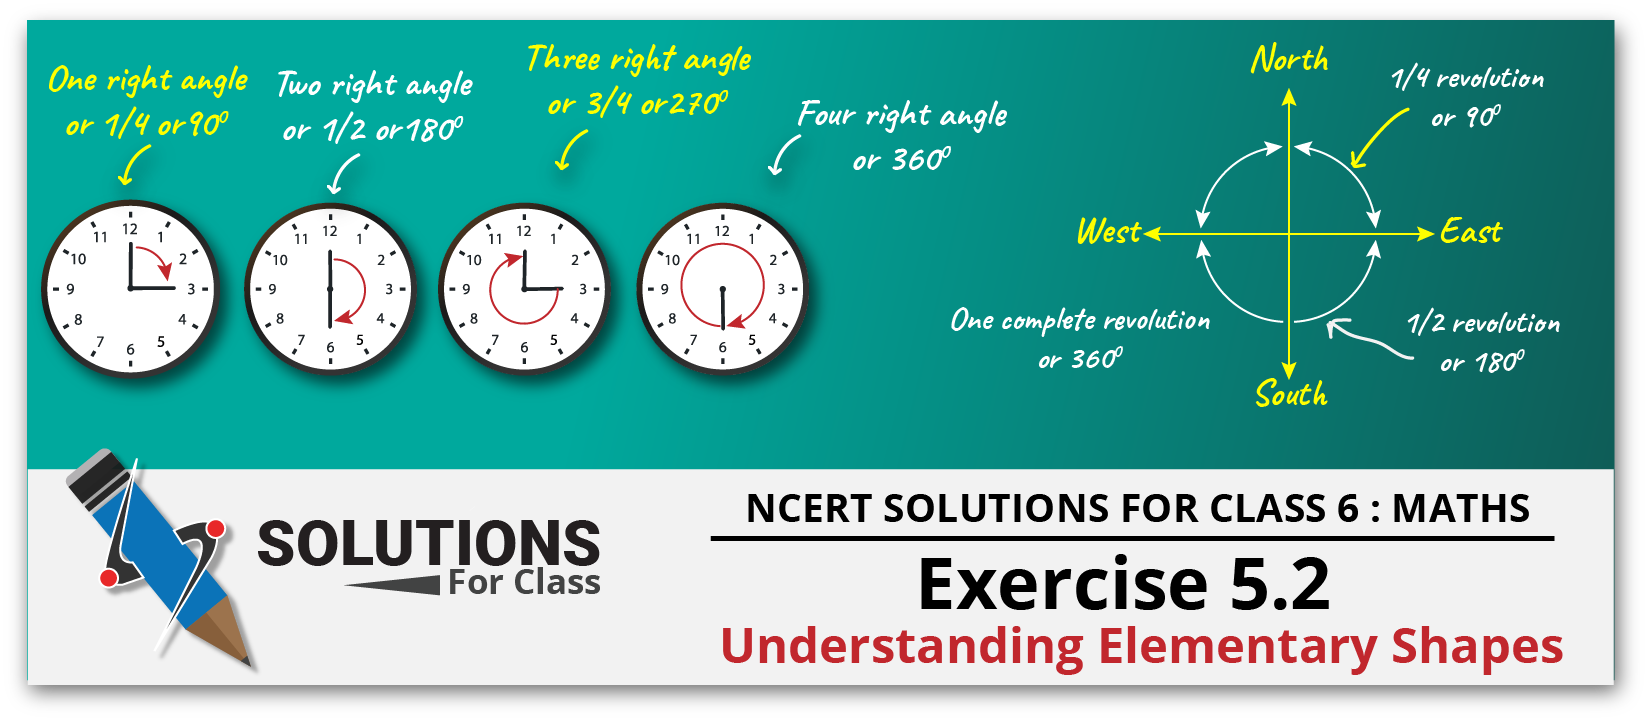 Understanding Elementary Shapes, Exercise 5.2